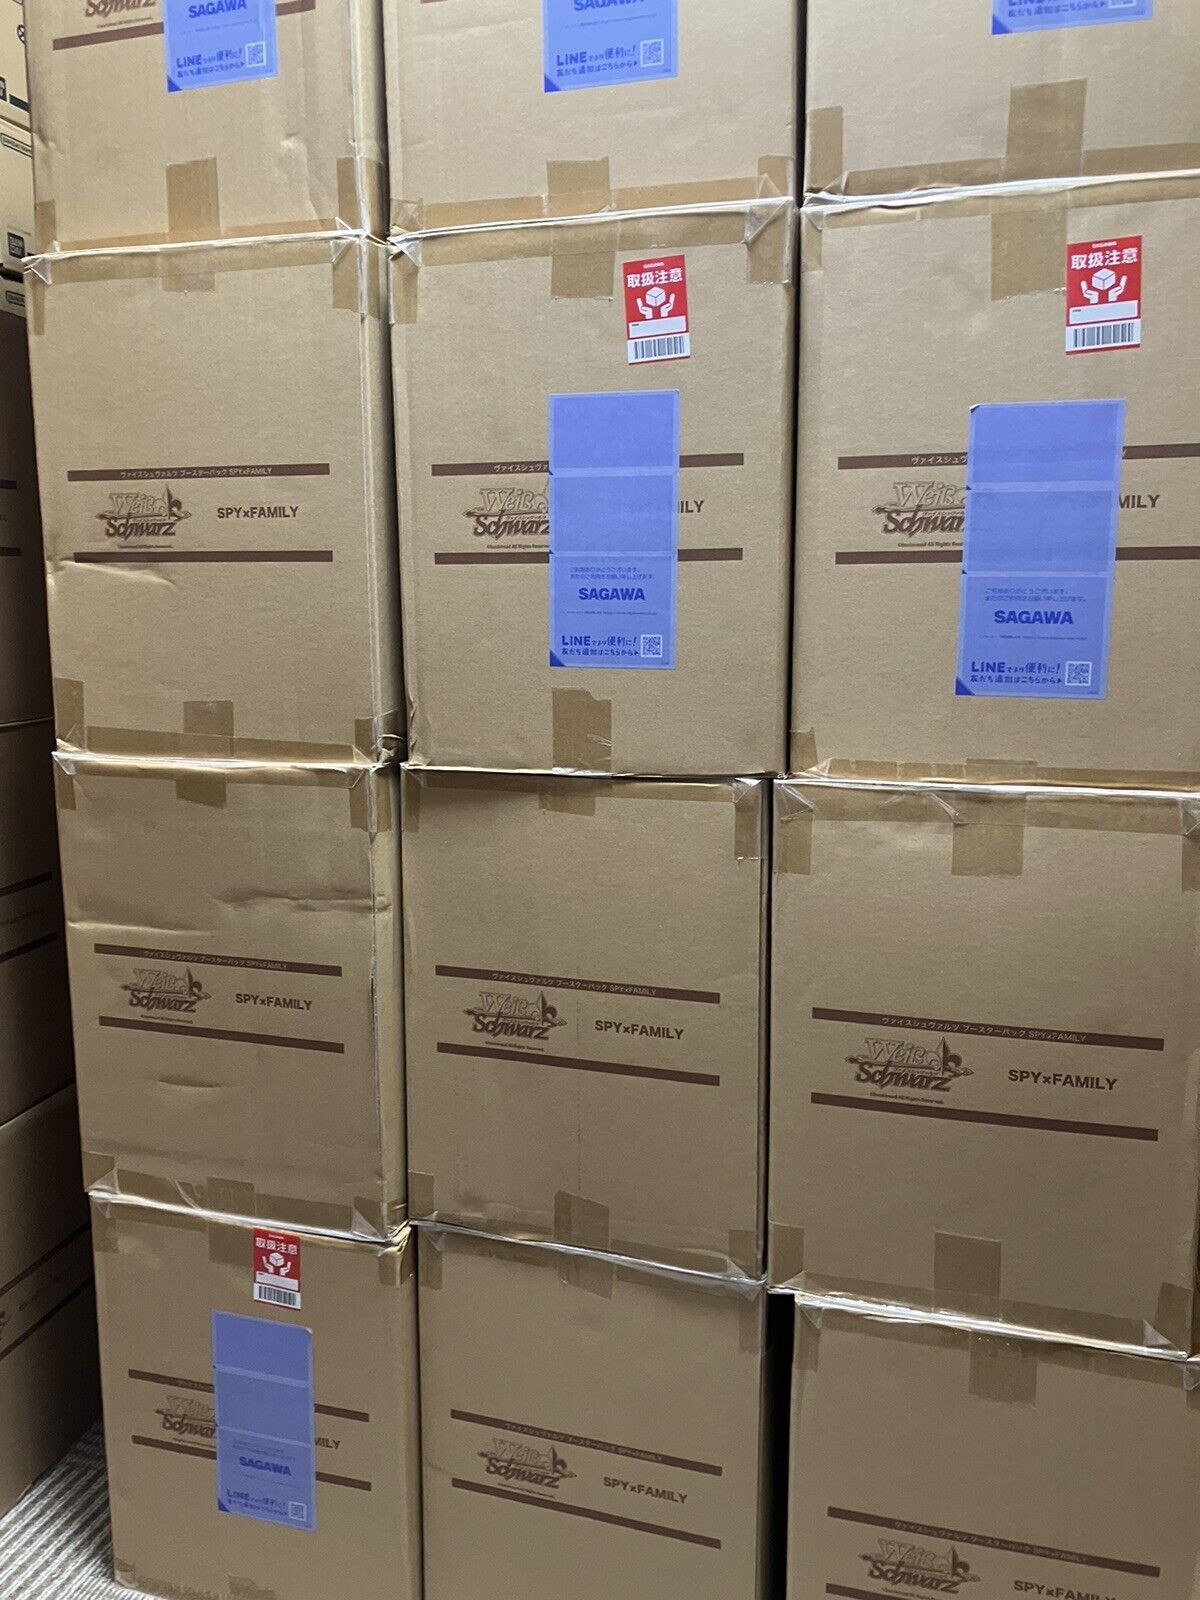 Weiss Schwarz Spy x Family Case 18 Boxes Japanese FedEx Japanses